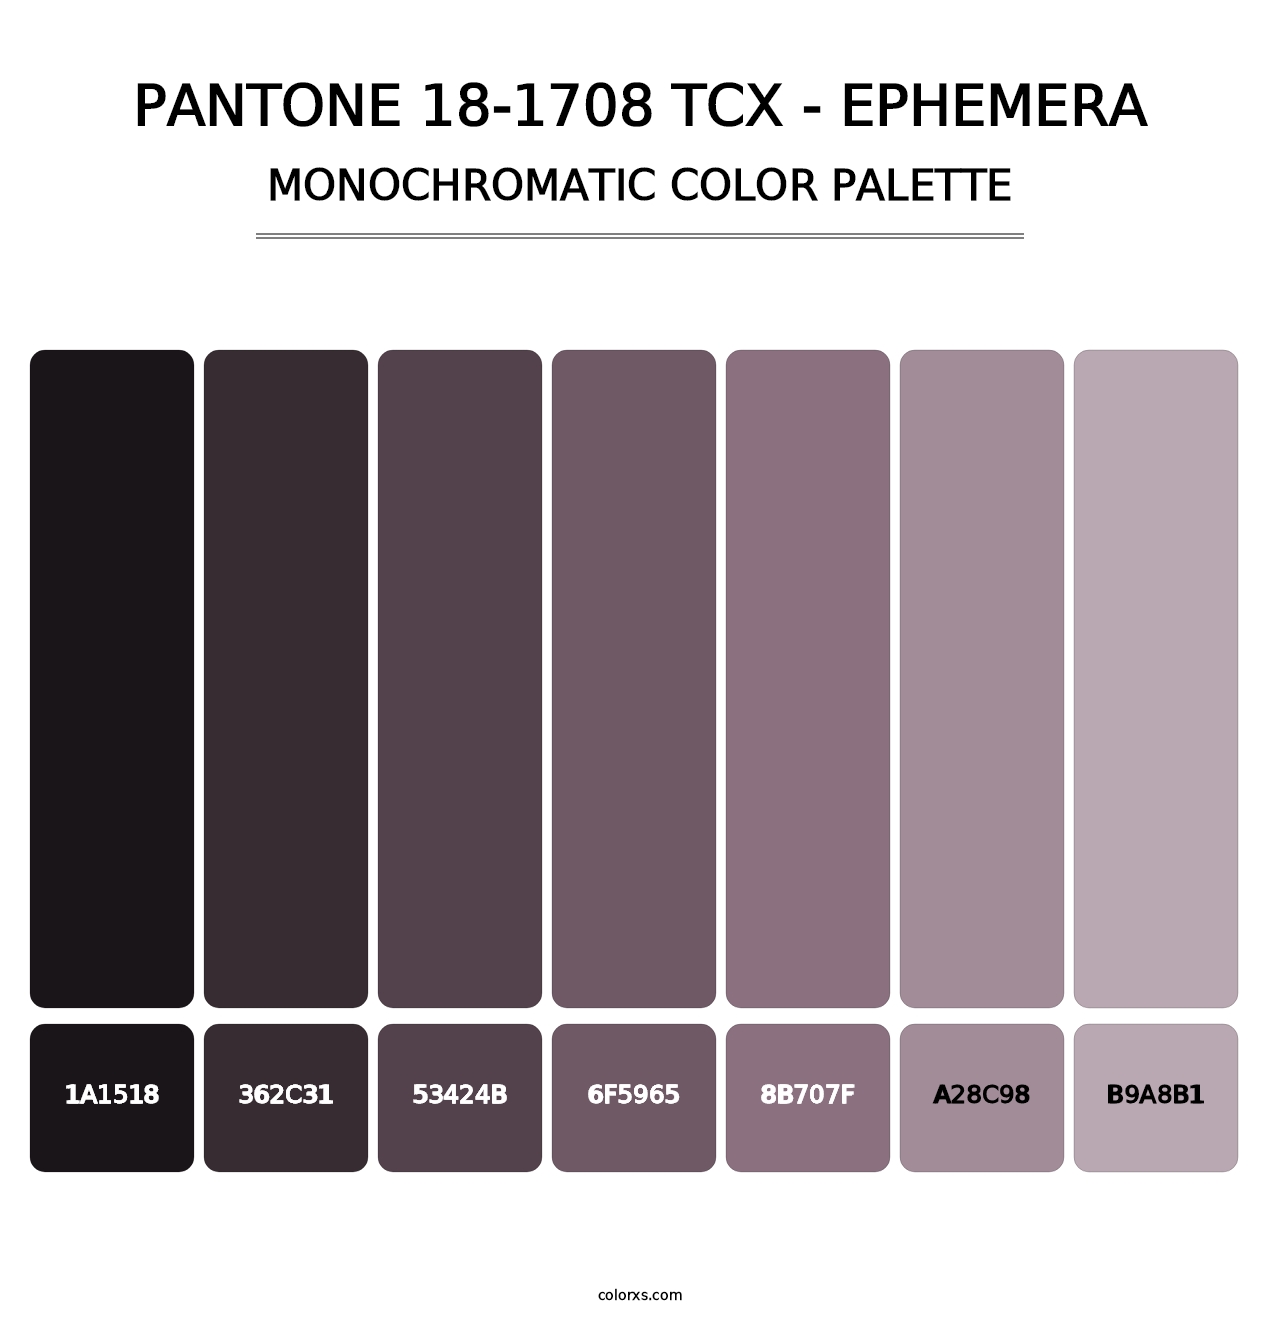 PANTONE 18-1708 TCX - Ephemera - Monochromatic Color Palette